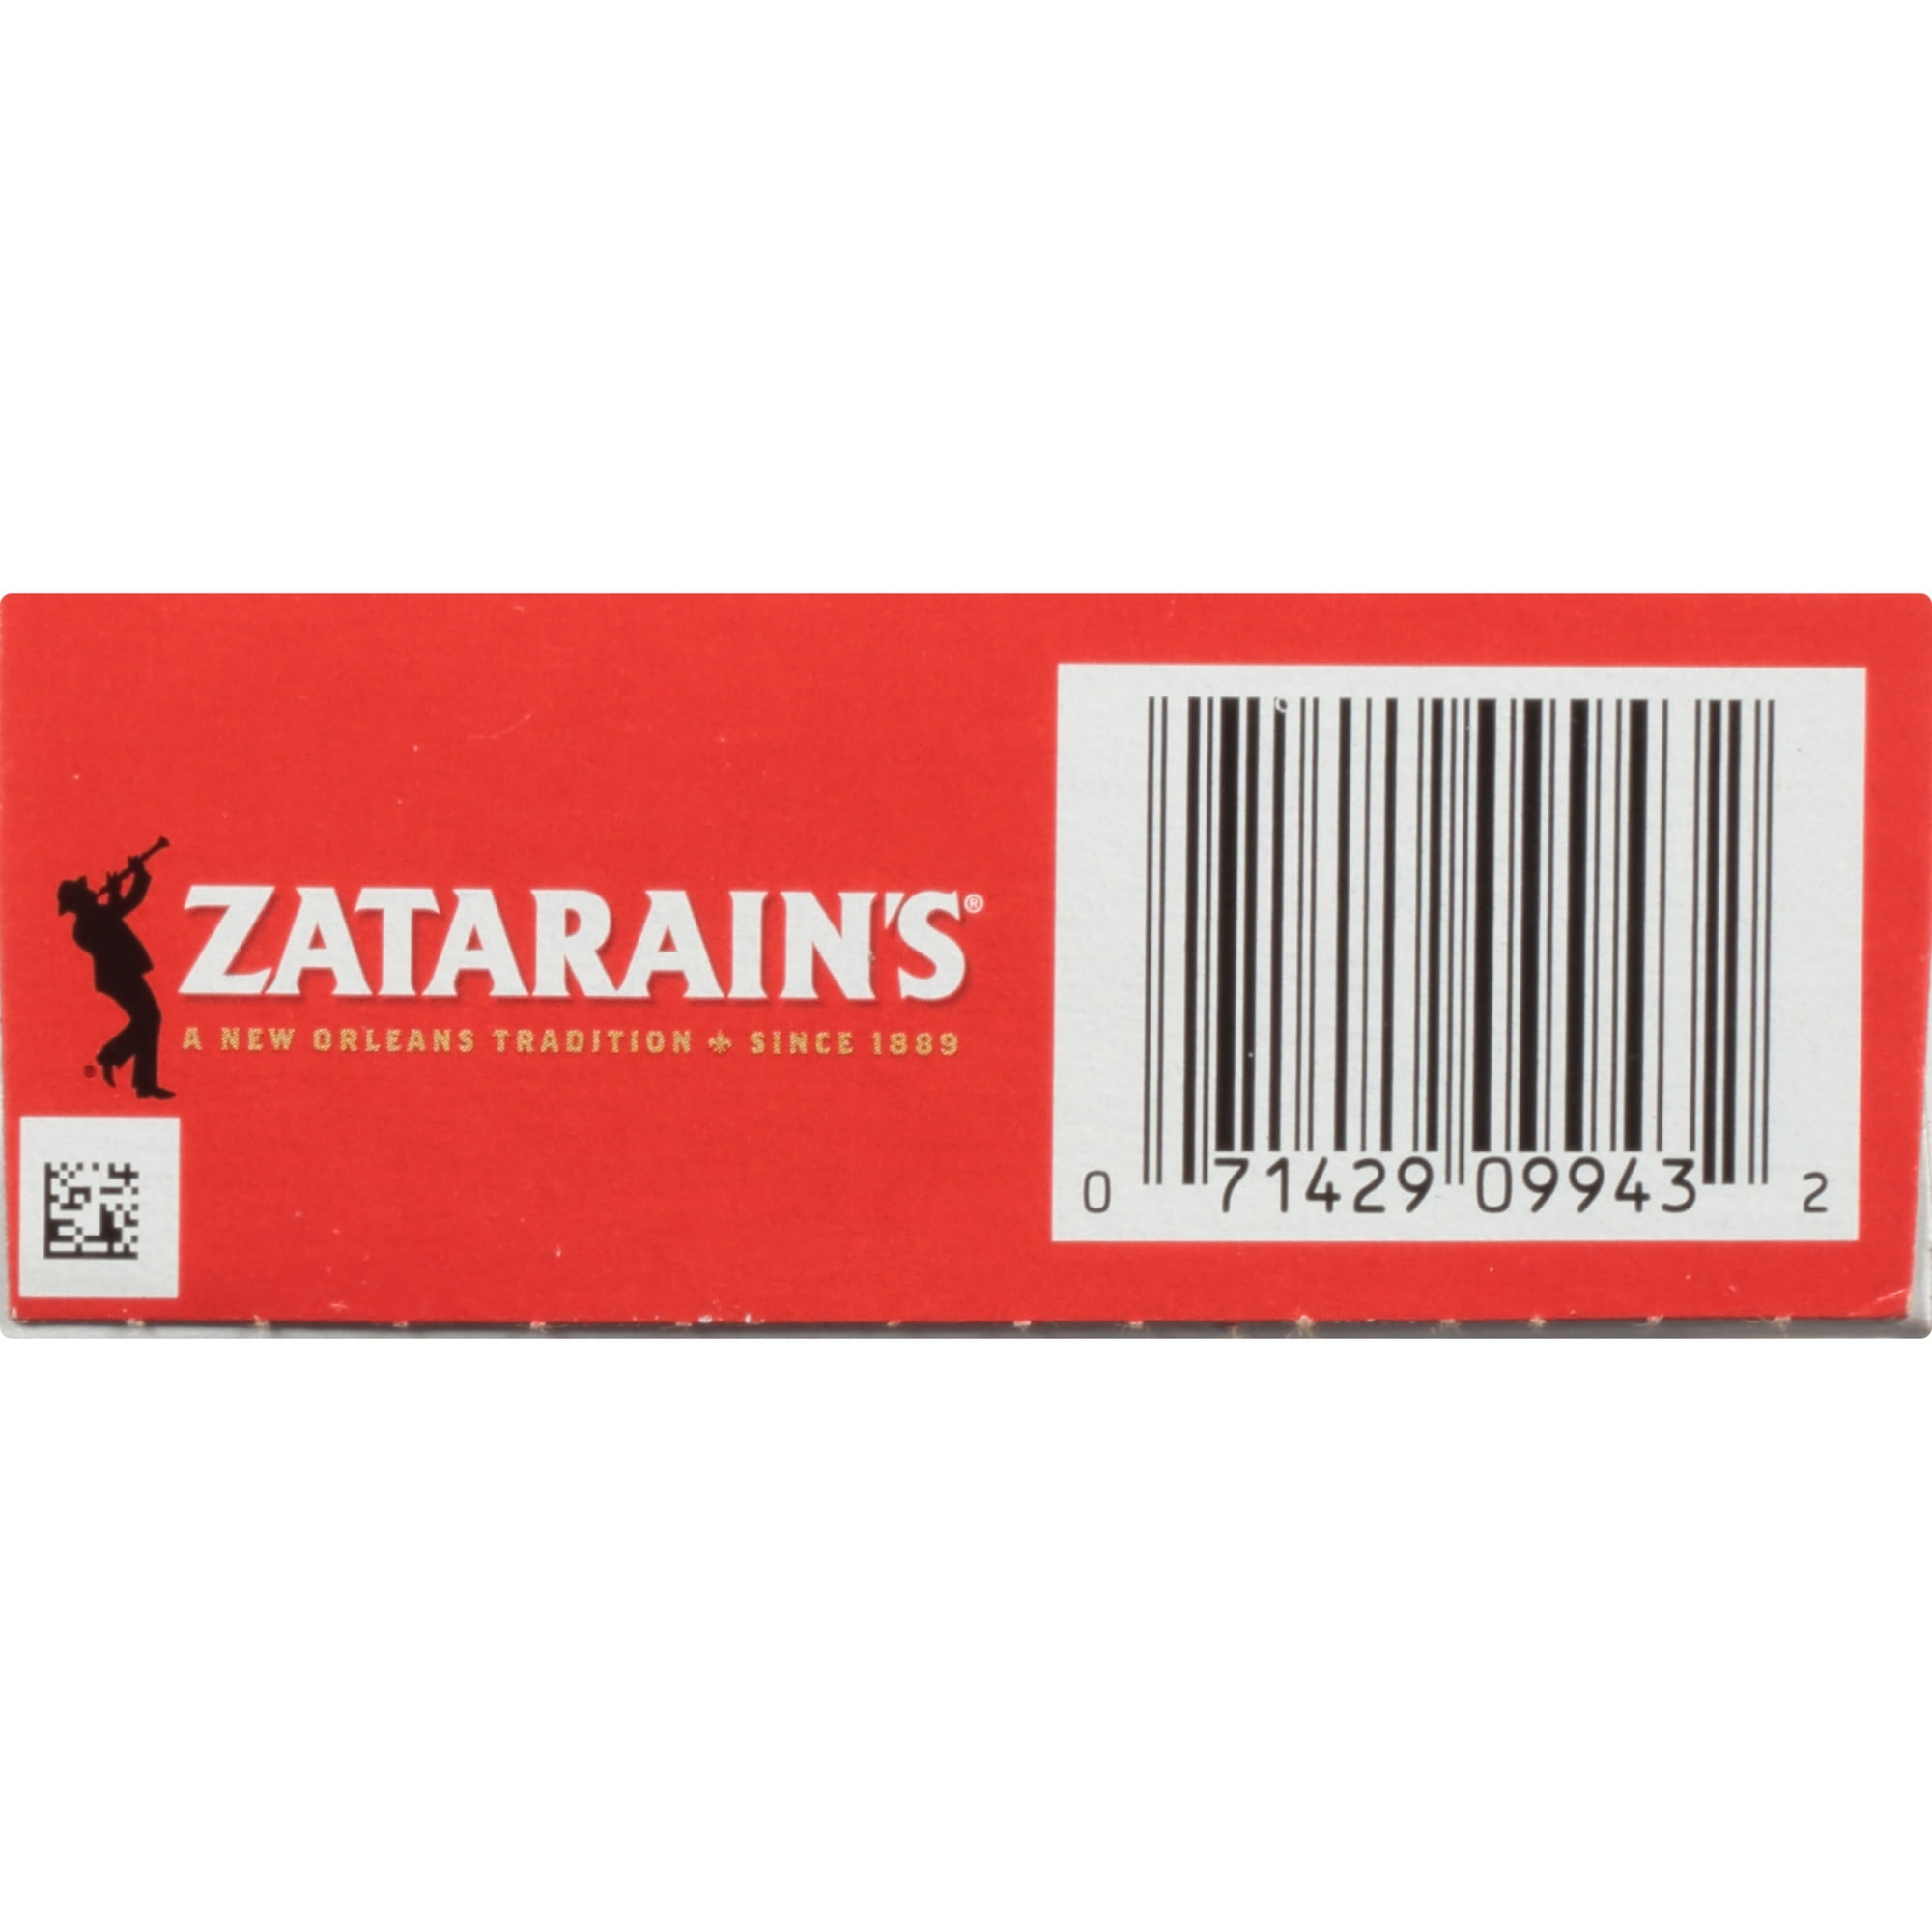 Zatarain's New Orleans Style Black Beans & Rice, 7-Ounce Boxes